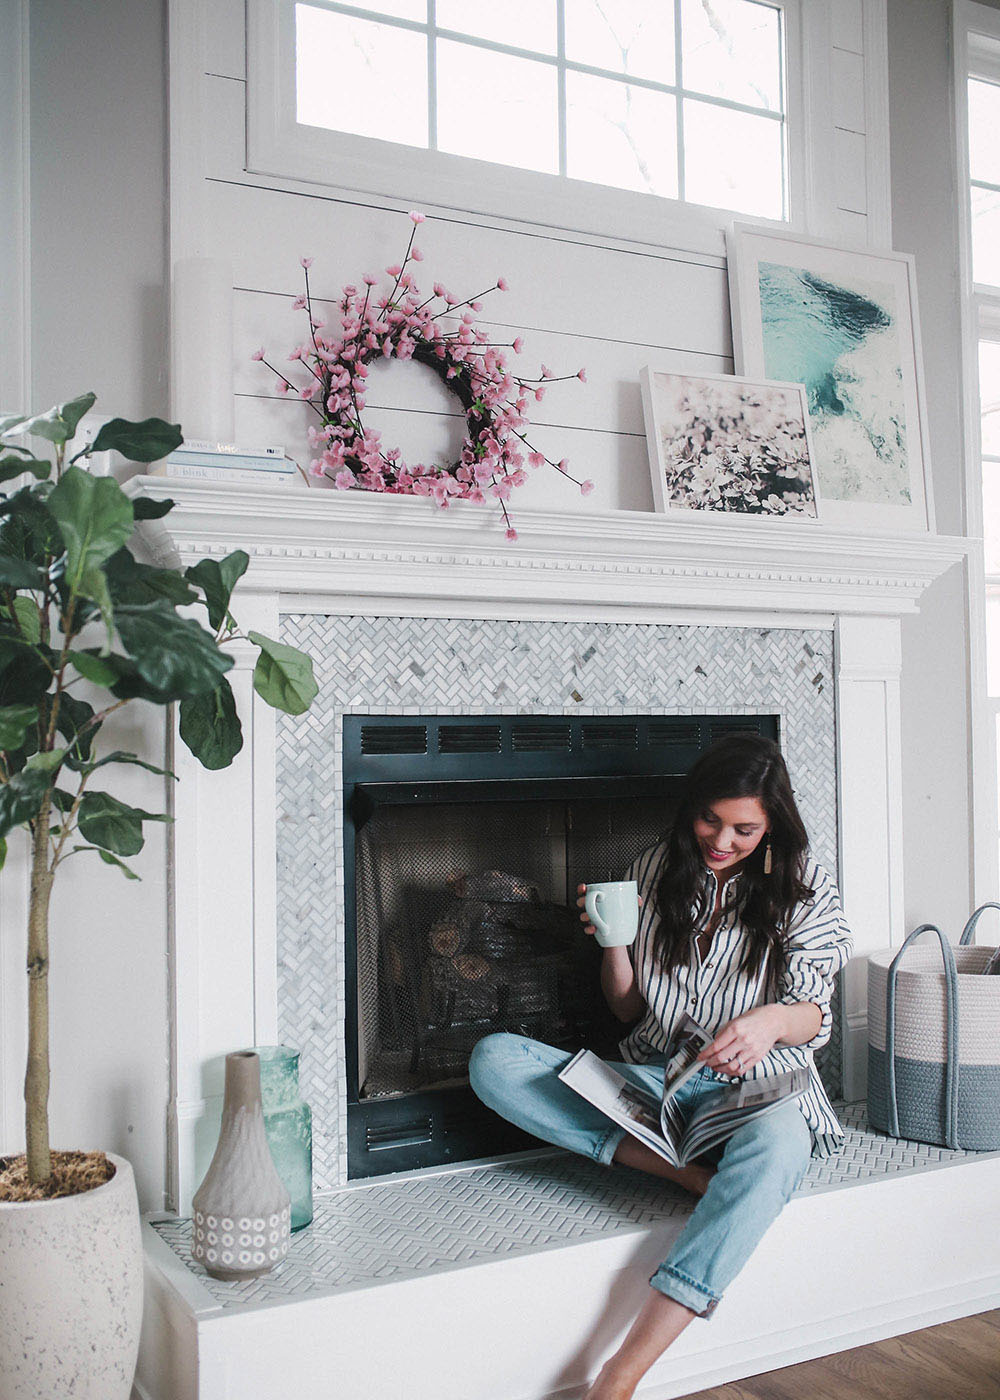 10 Fireplace Mantel Decorating Ideas » Full Service Chimney™